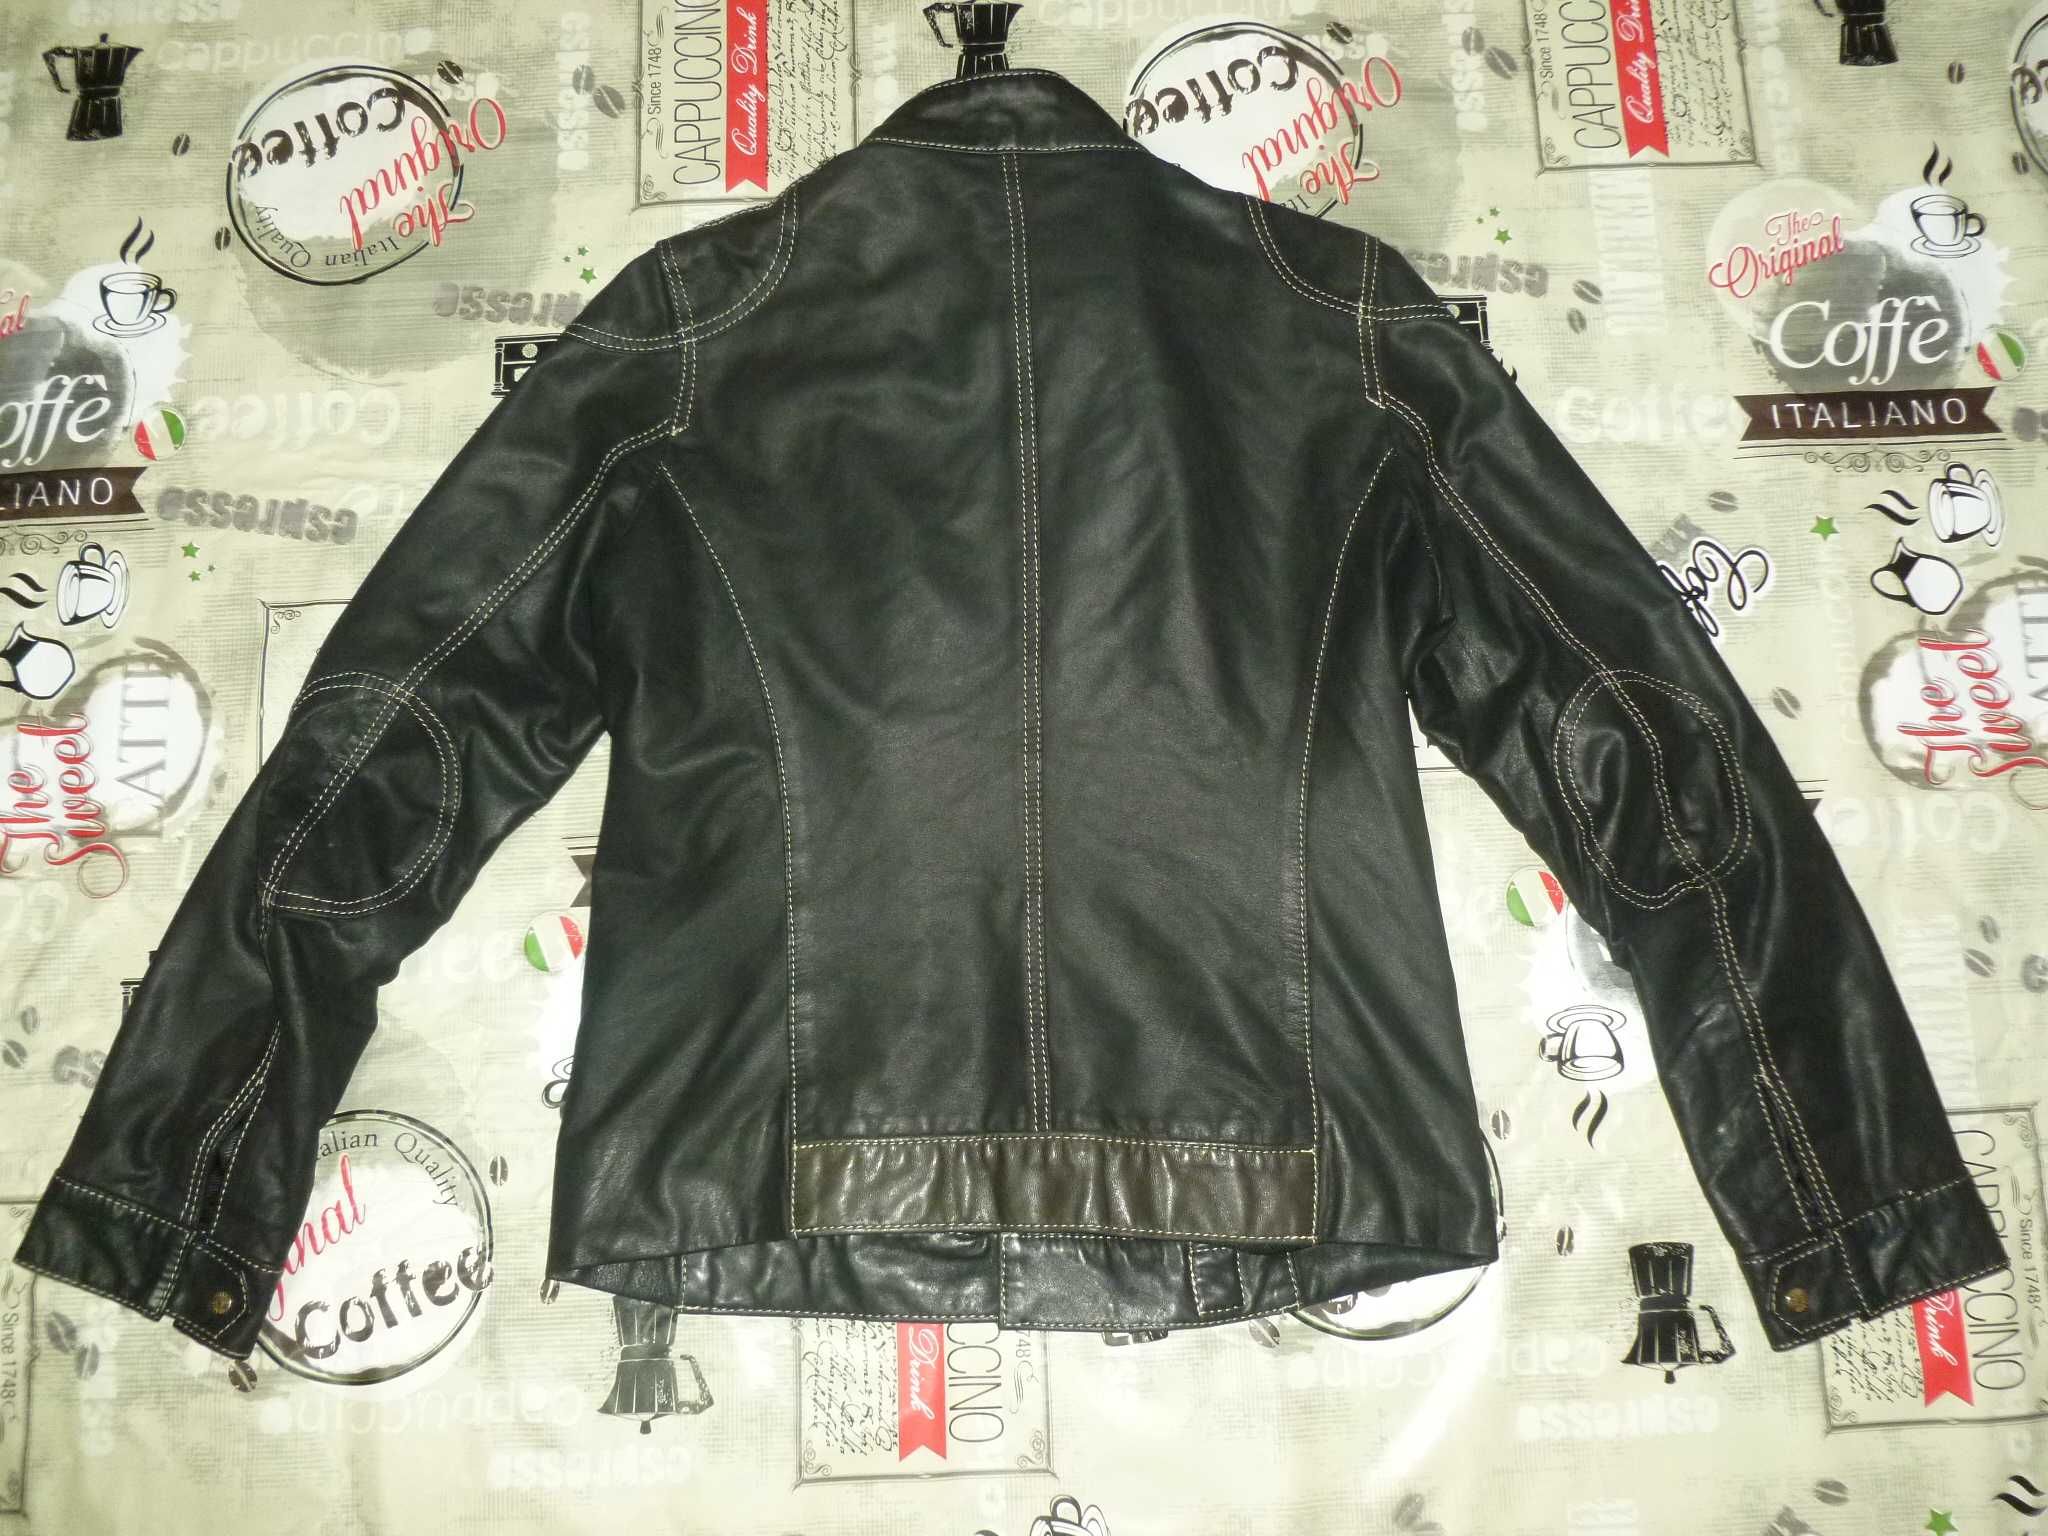 Кожаная куртка на юношу (46) Beymen Business, мотокуртка